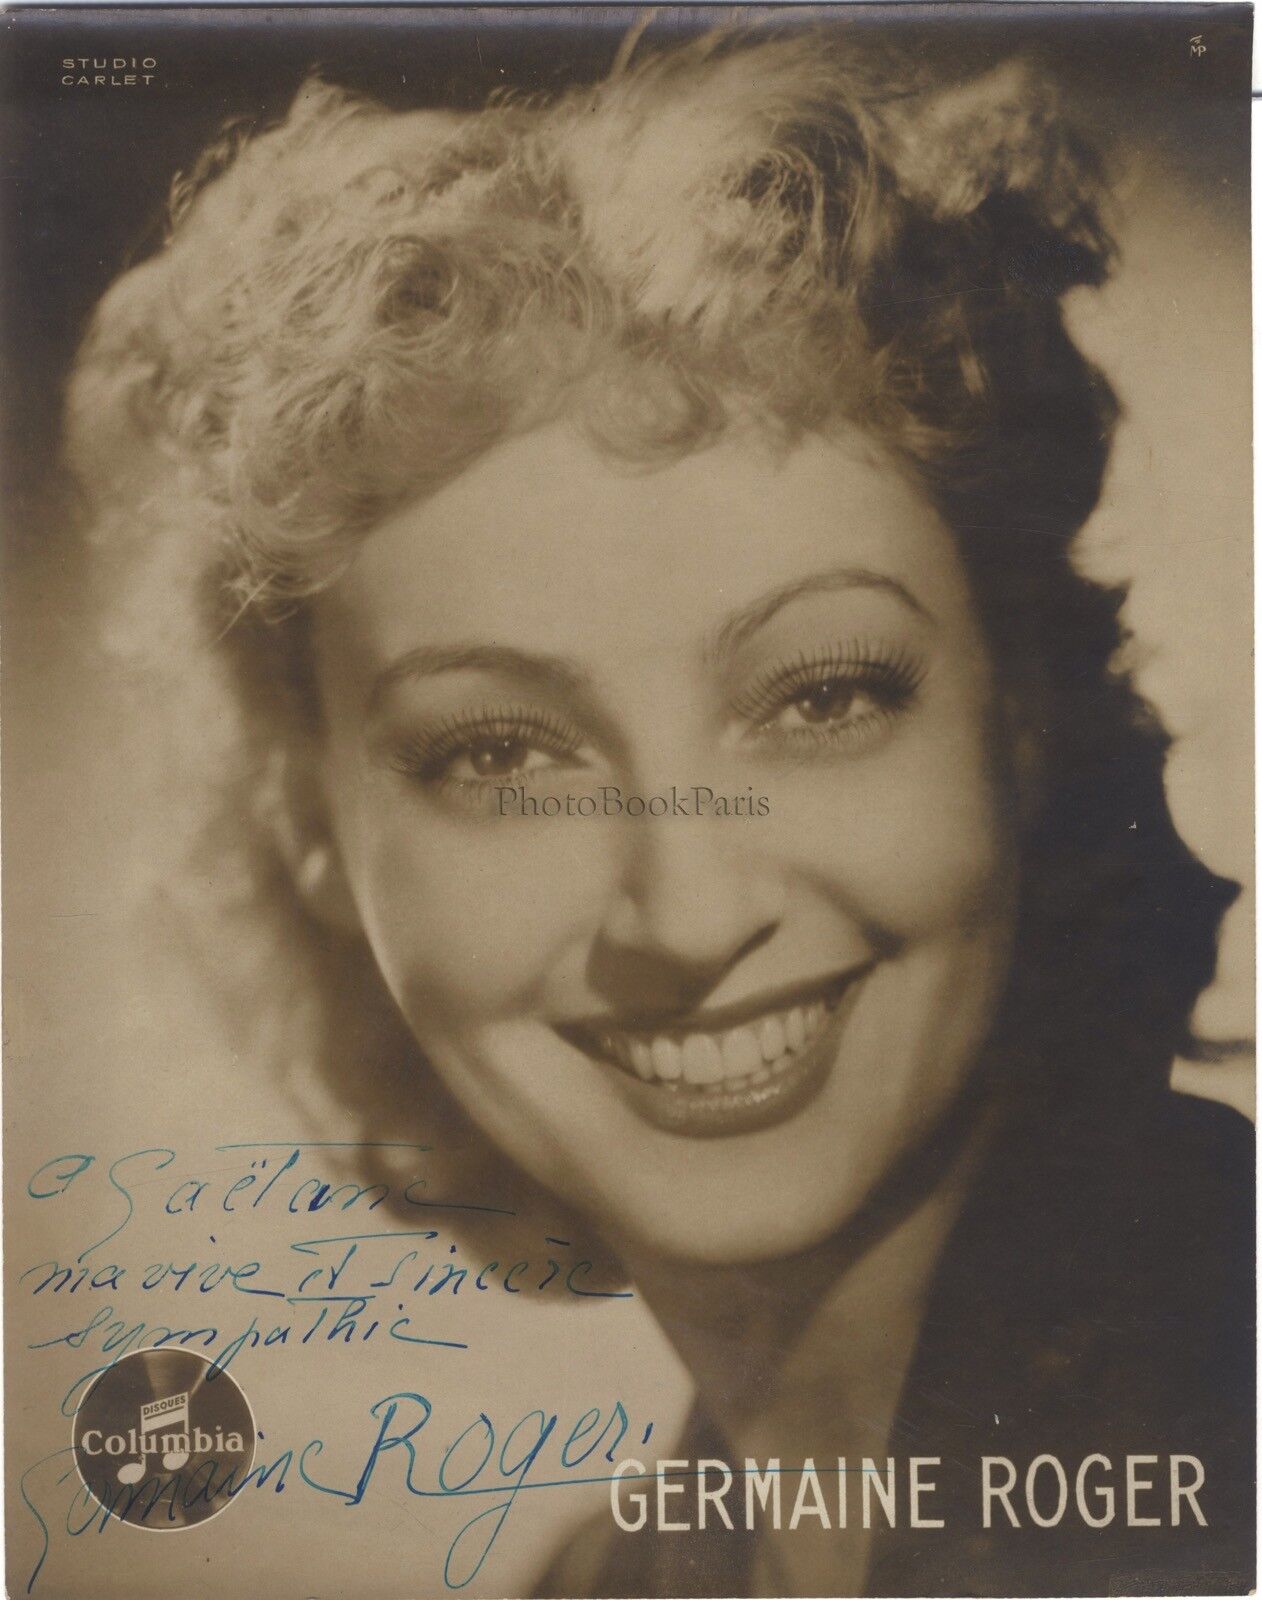 Germaine Roger singer actress born in Marseille autographed photo vintage c1935